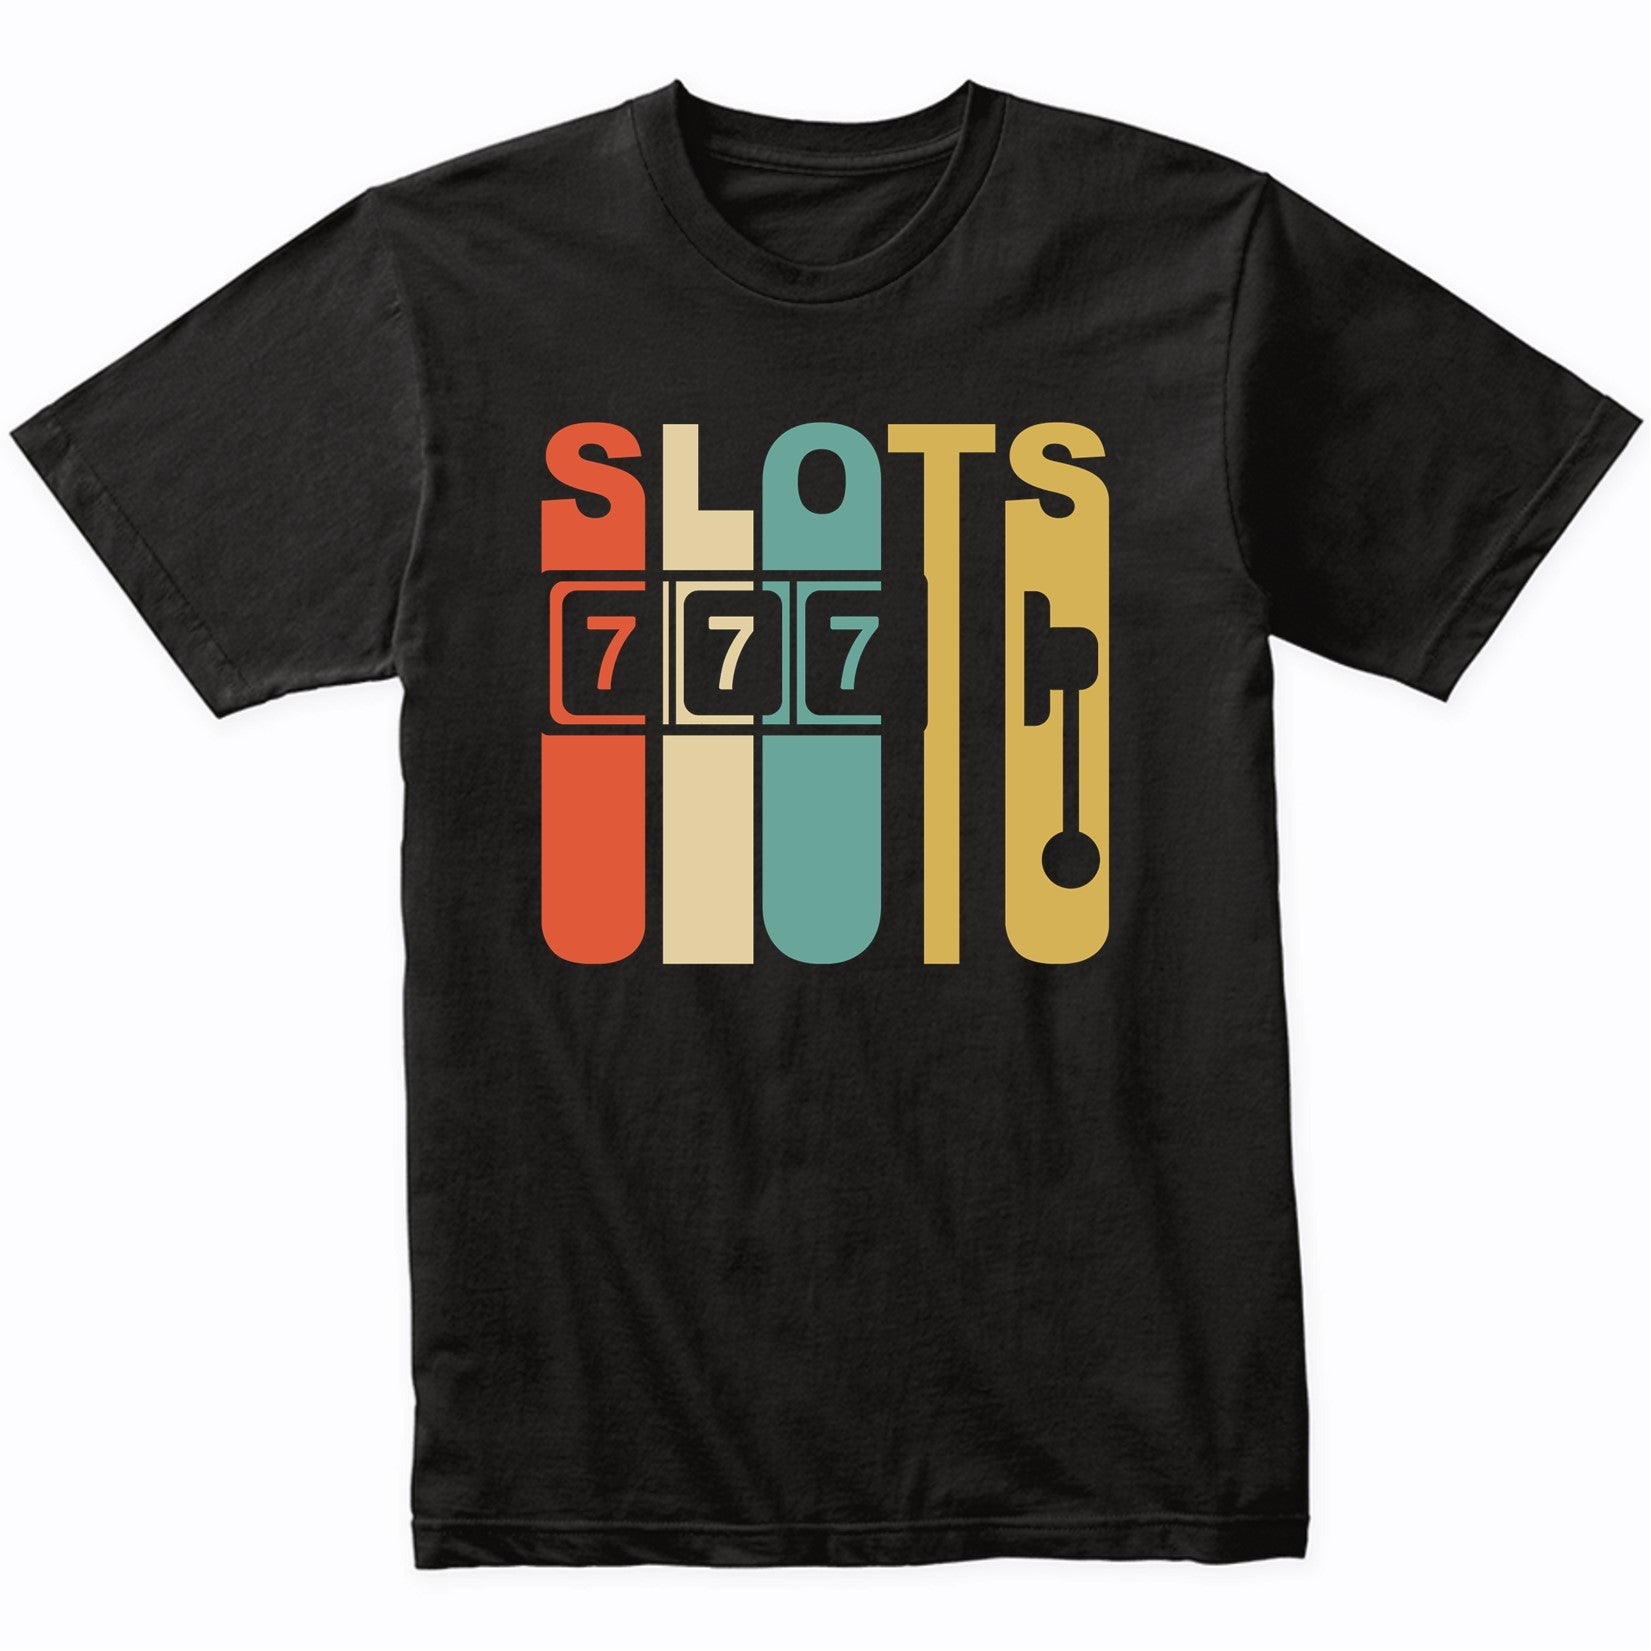 Retro 1970's Style Slot Machine Slots Gambling T-Shirt